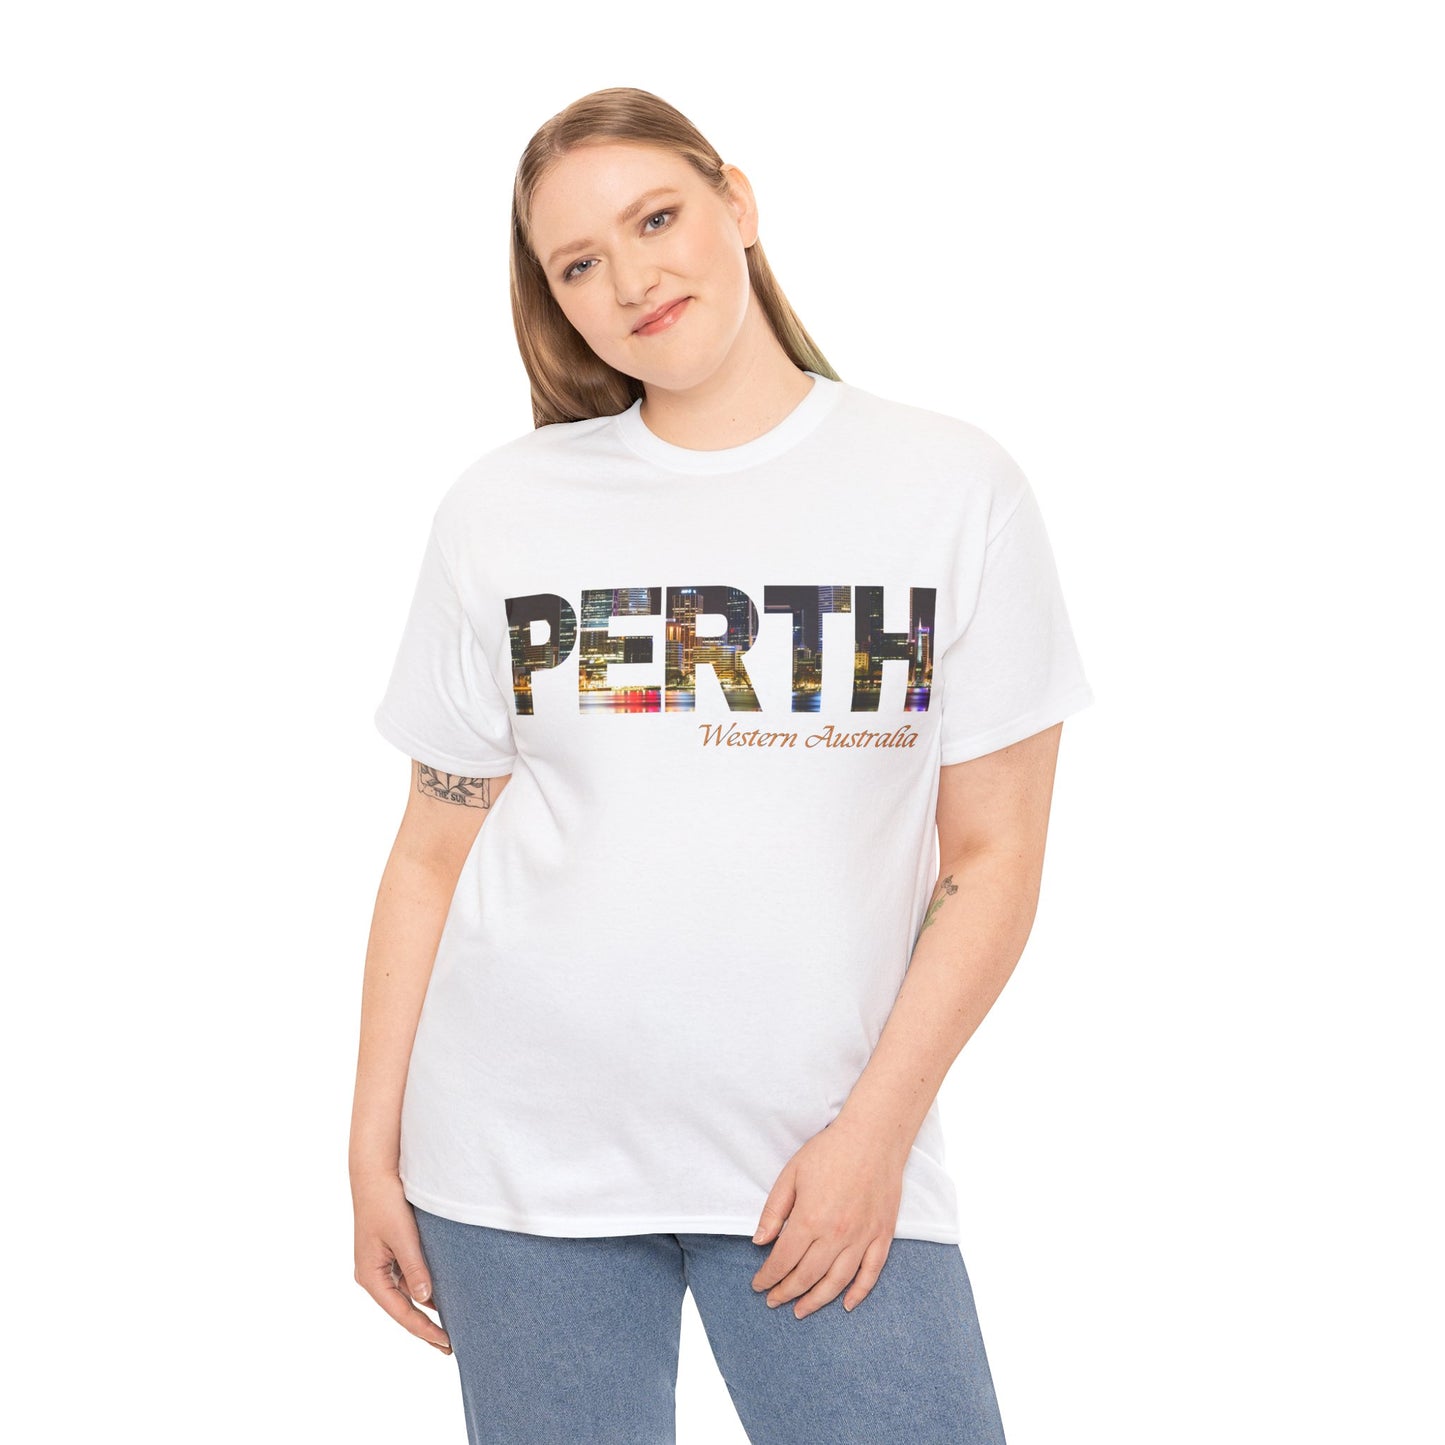 Perth WA T-Shirt, Perth CBD Tee 100% Cotton, 3 Colours, AUS-USA-CAN warehouse, local post.